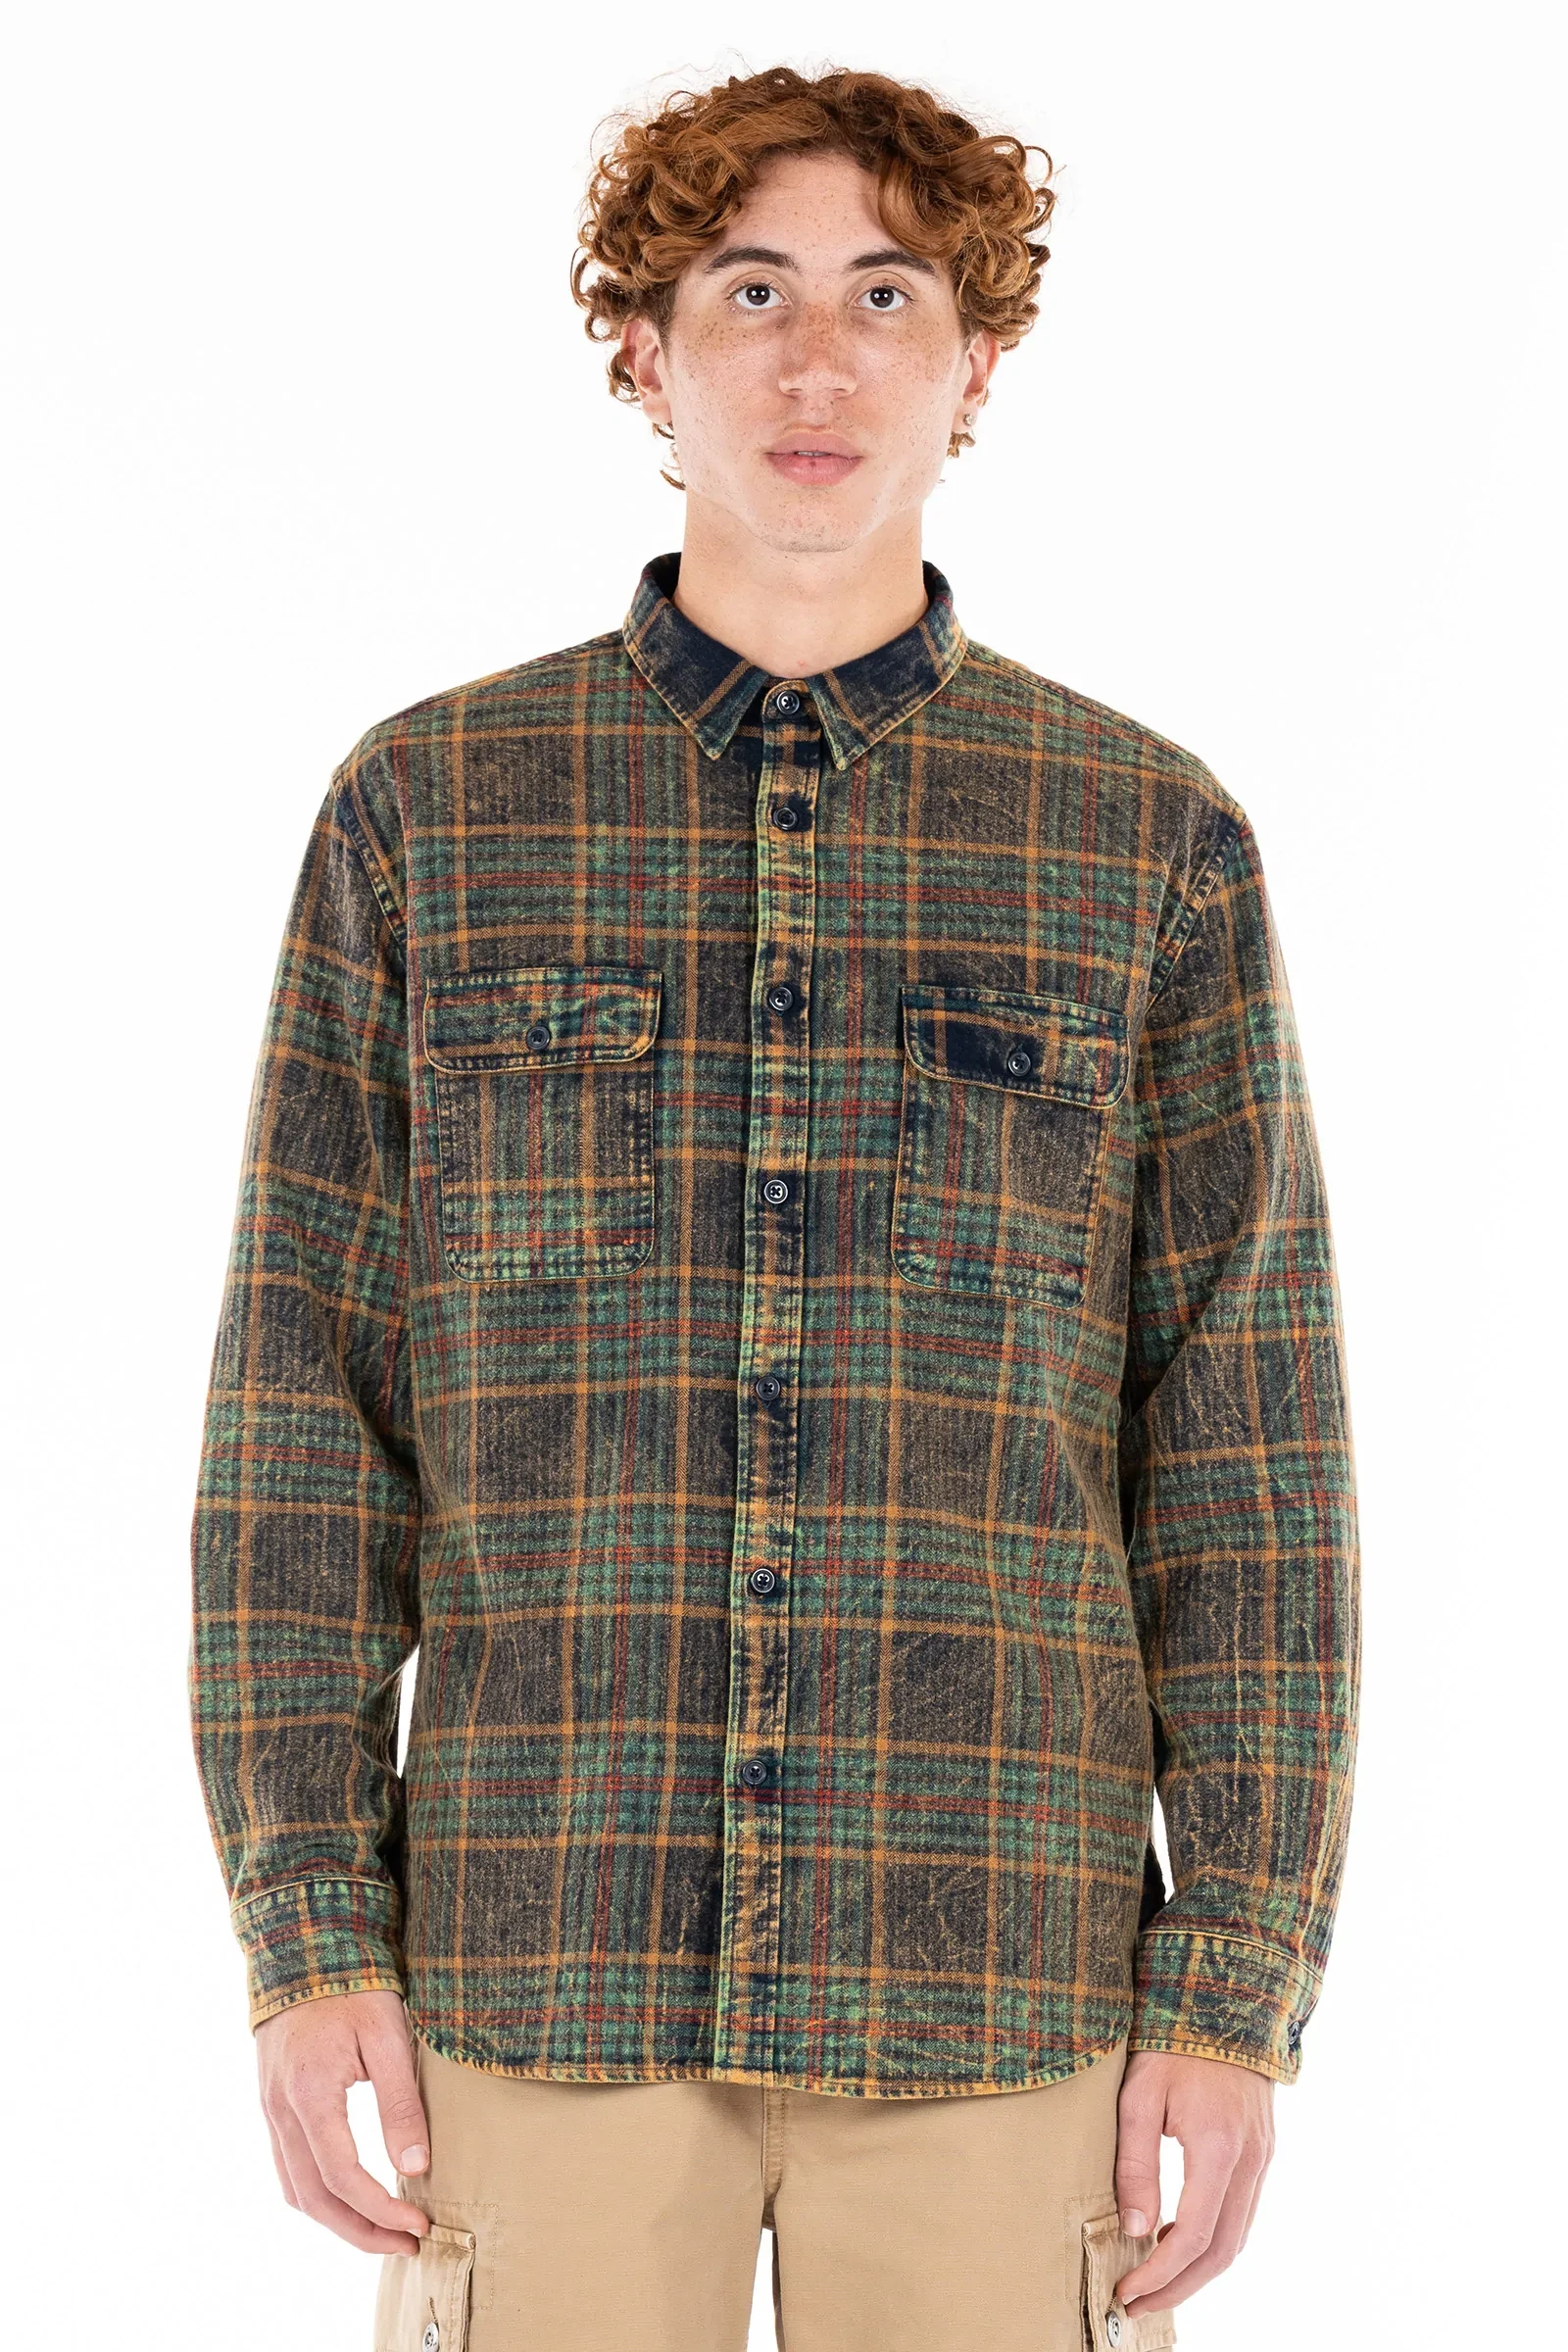 Aspen Flannel Shirt - Sycamore